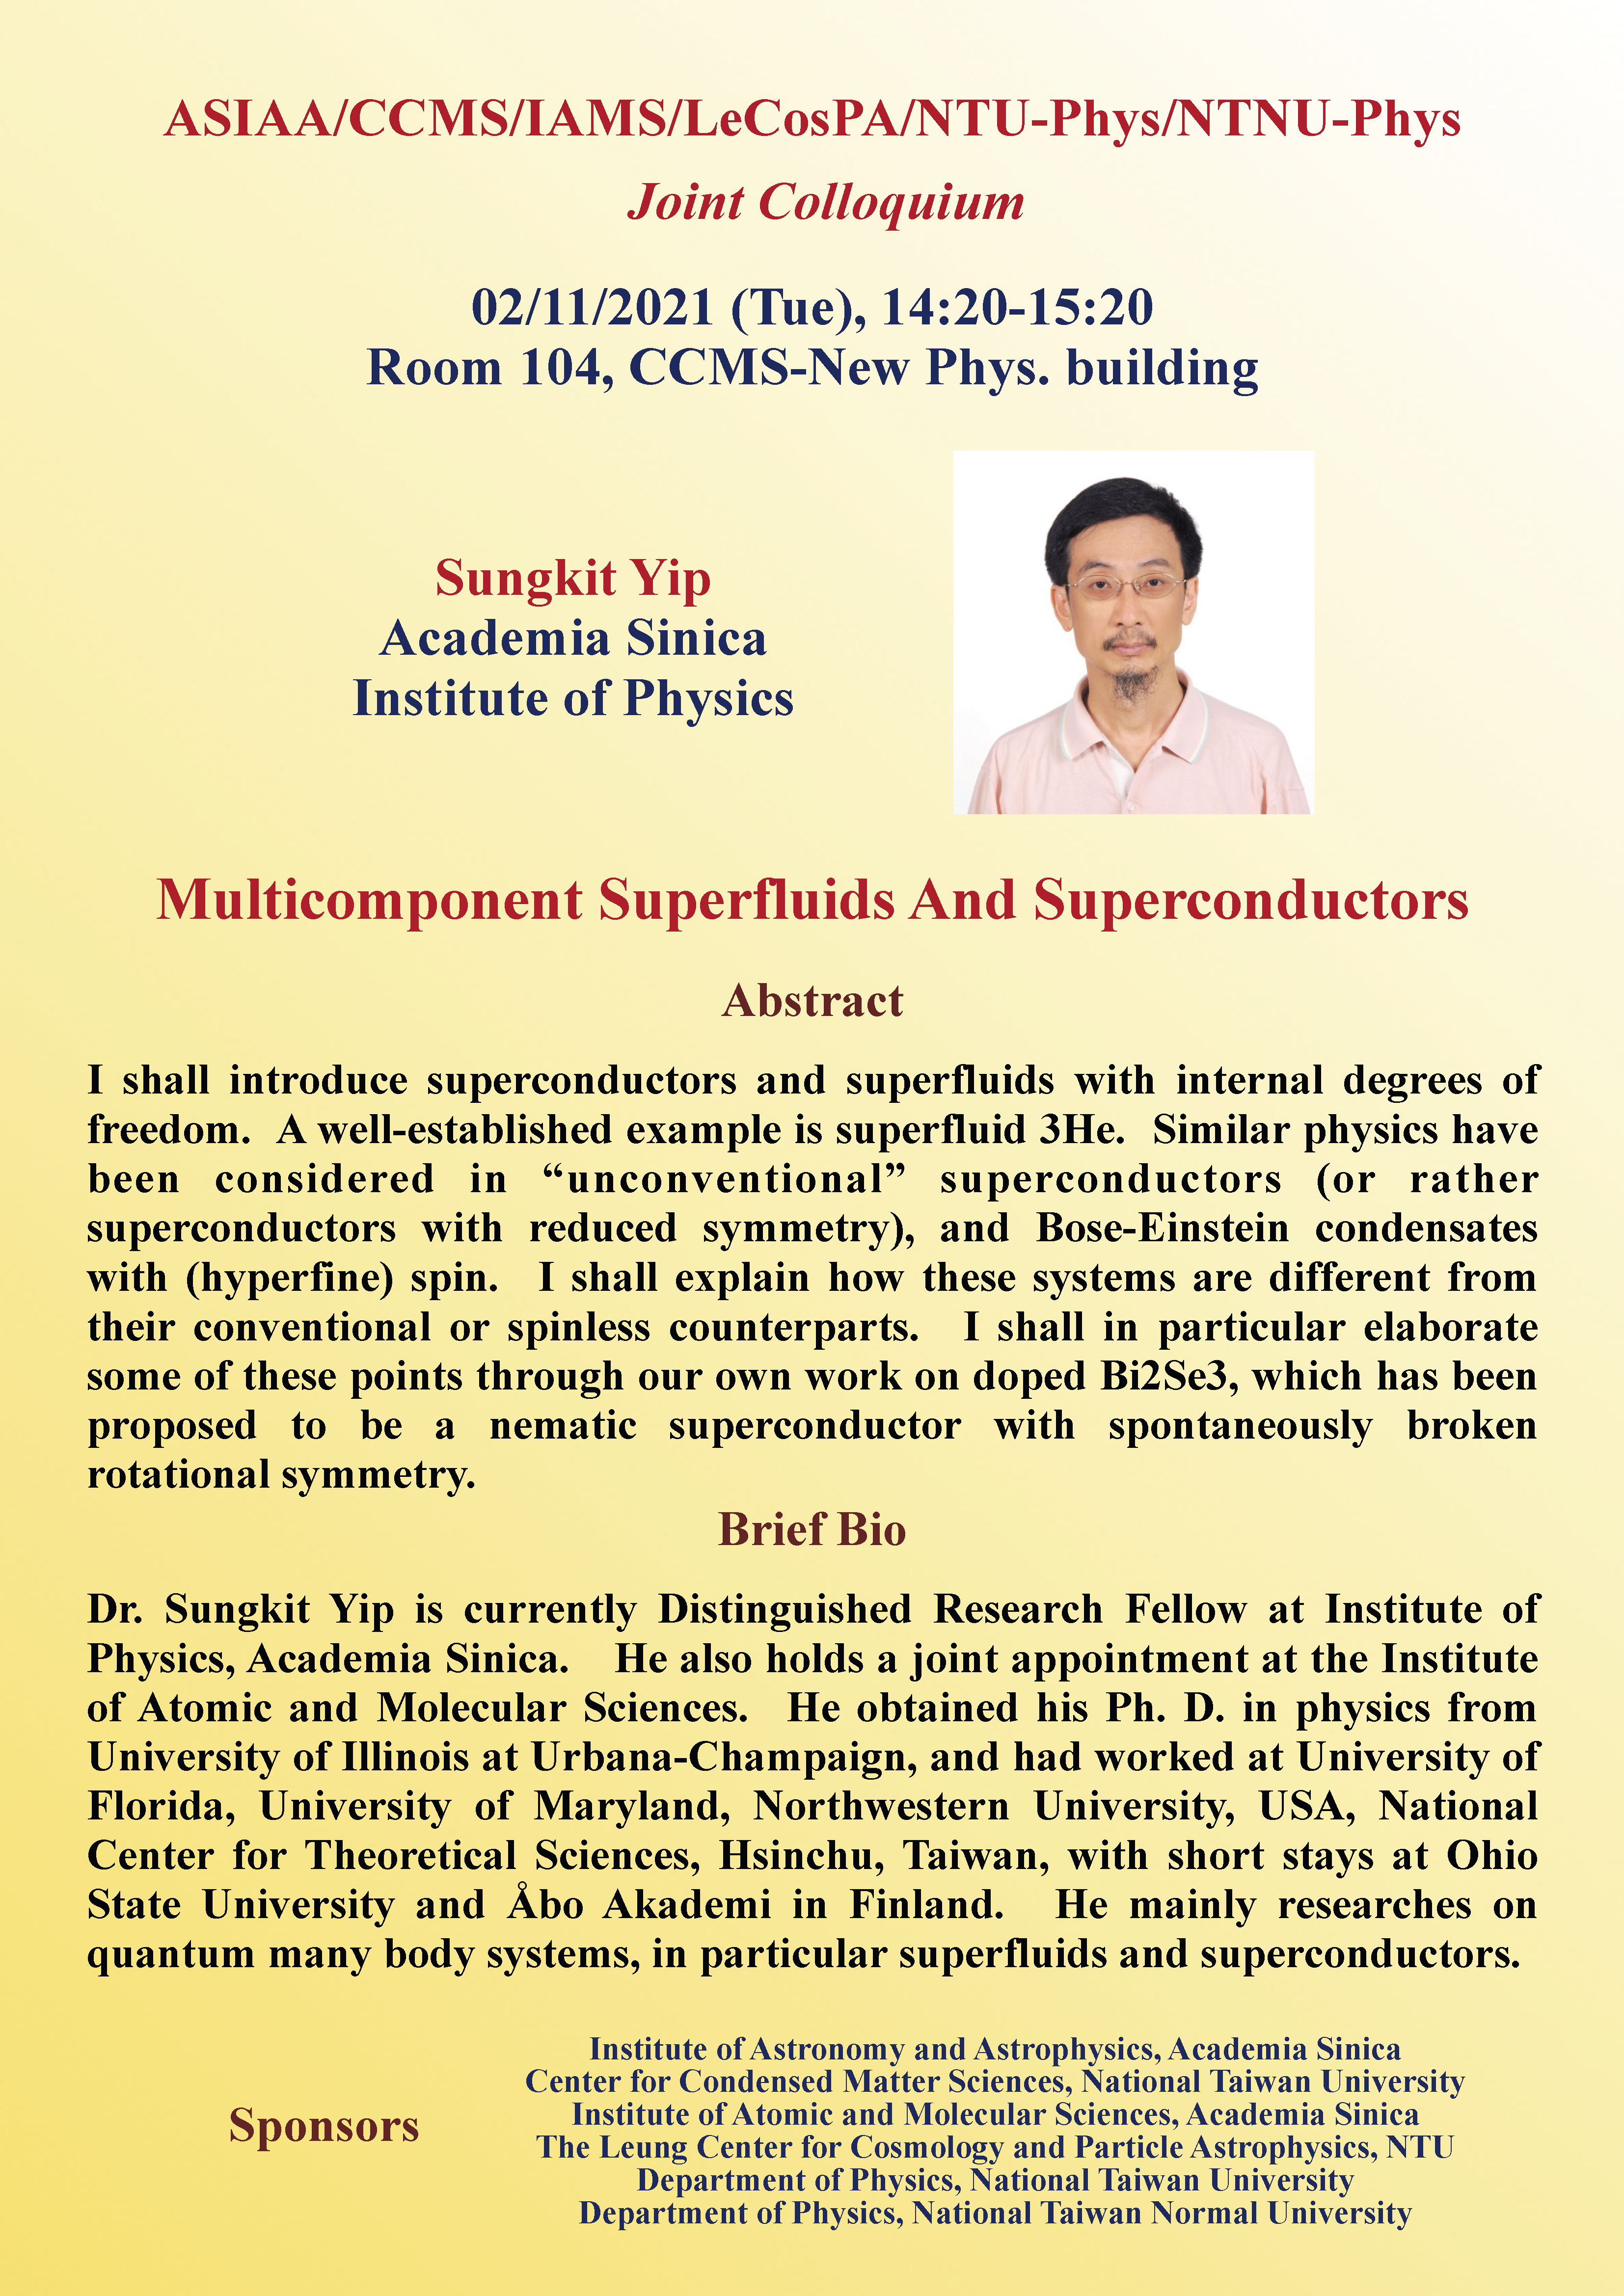 Multicomponent Superfluids and Superconductors